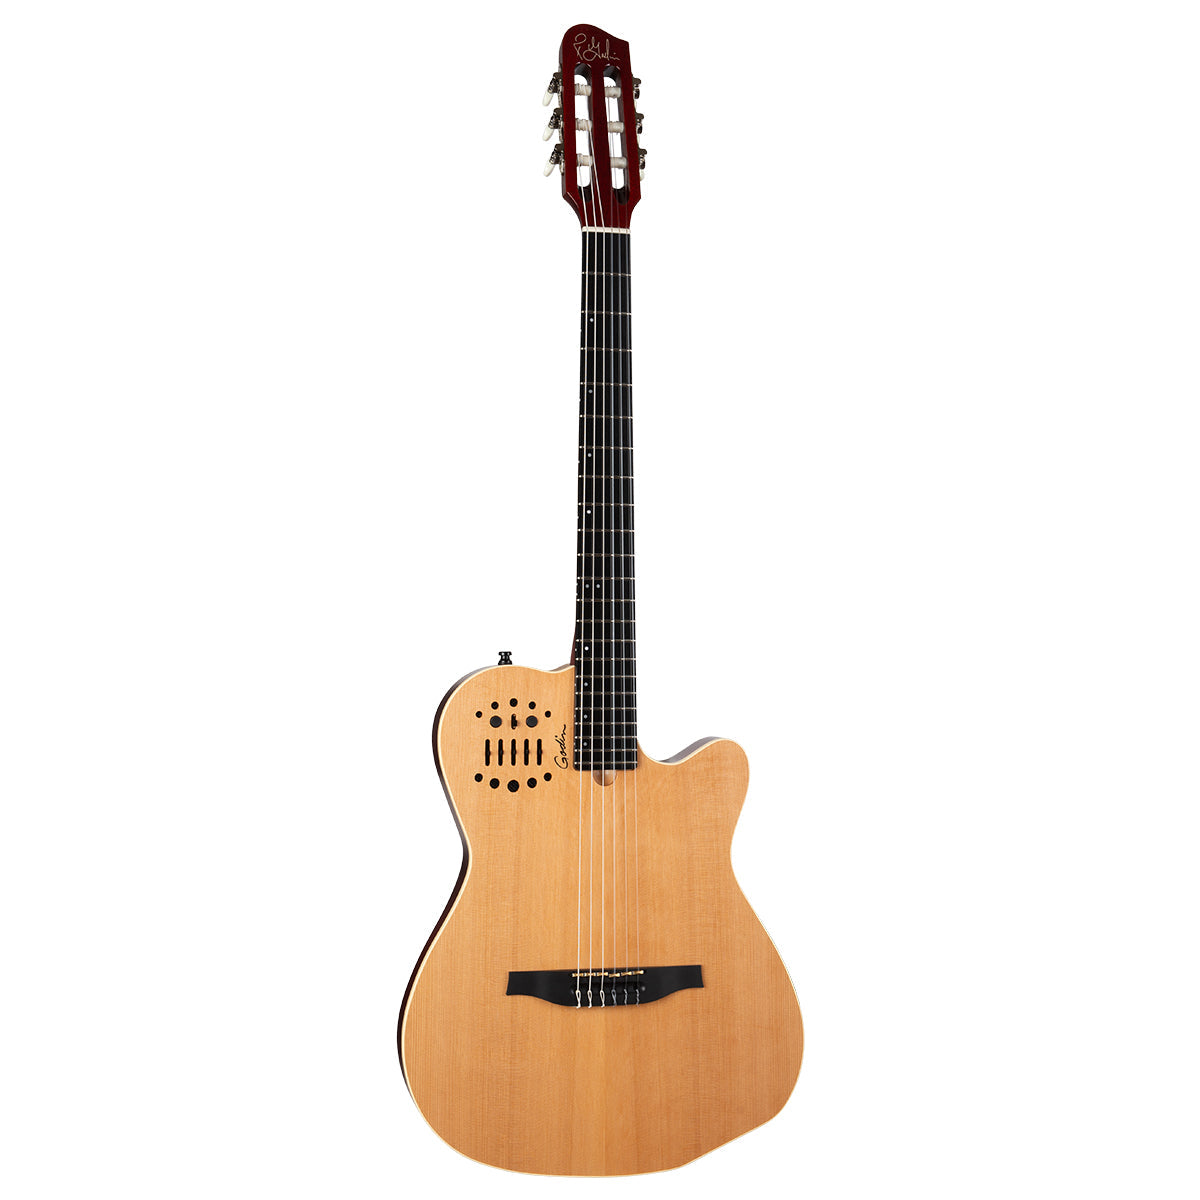 Godin ACS Slim Nylon 2 Voice Guitar ~ Cedar Natural, Electric Guitar for sale at Richards Guitars.